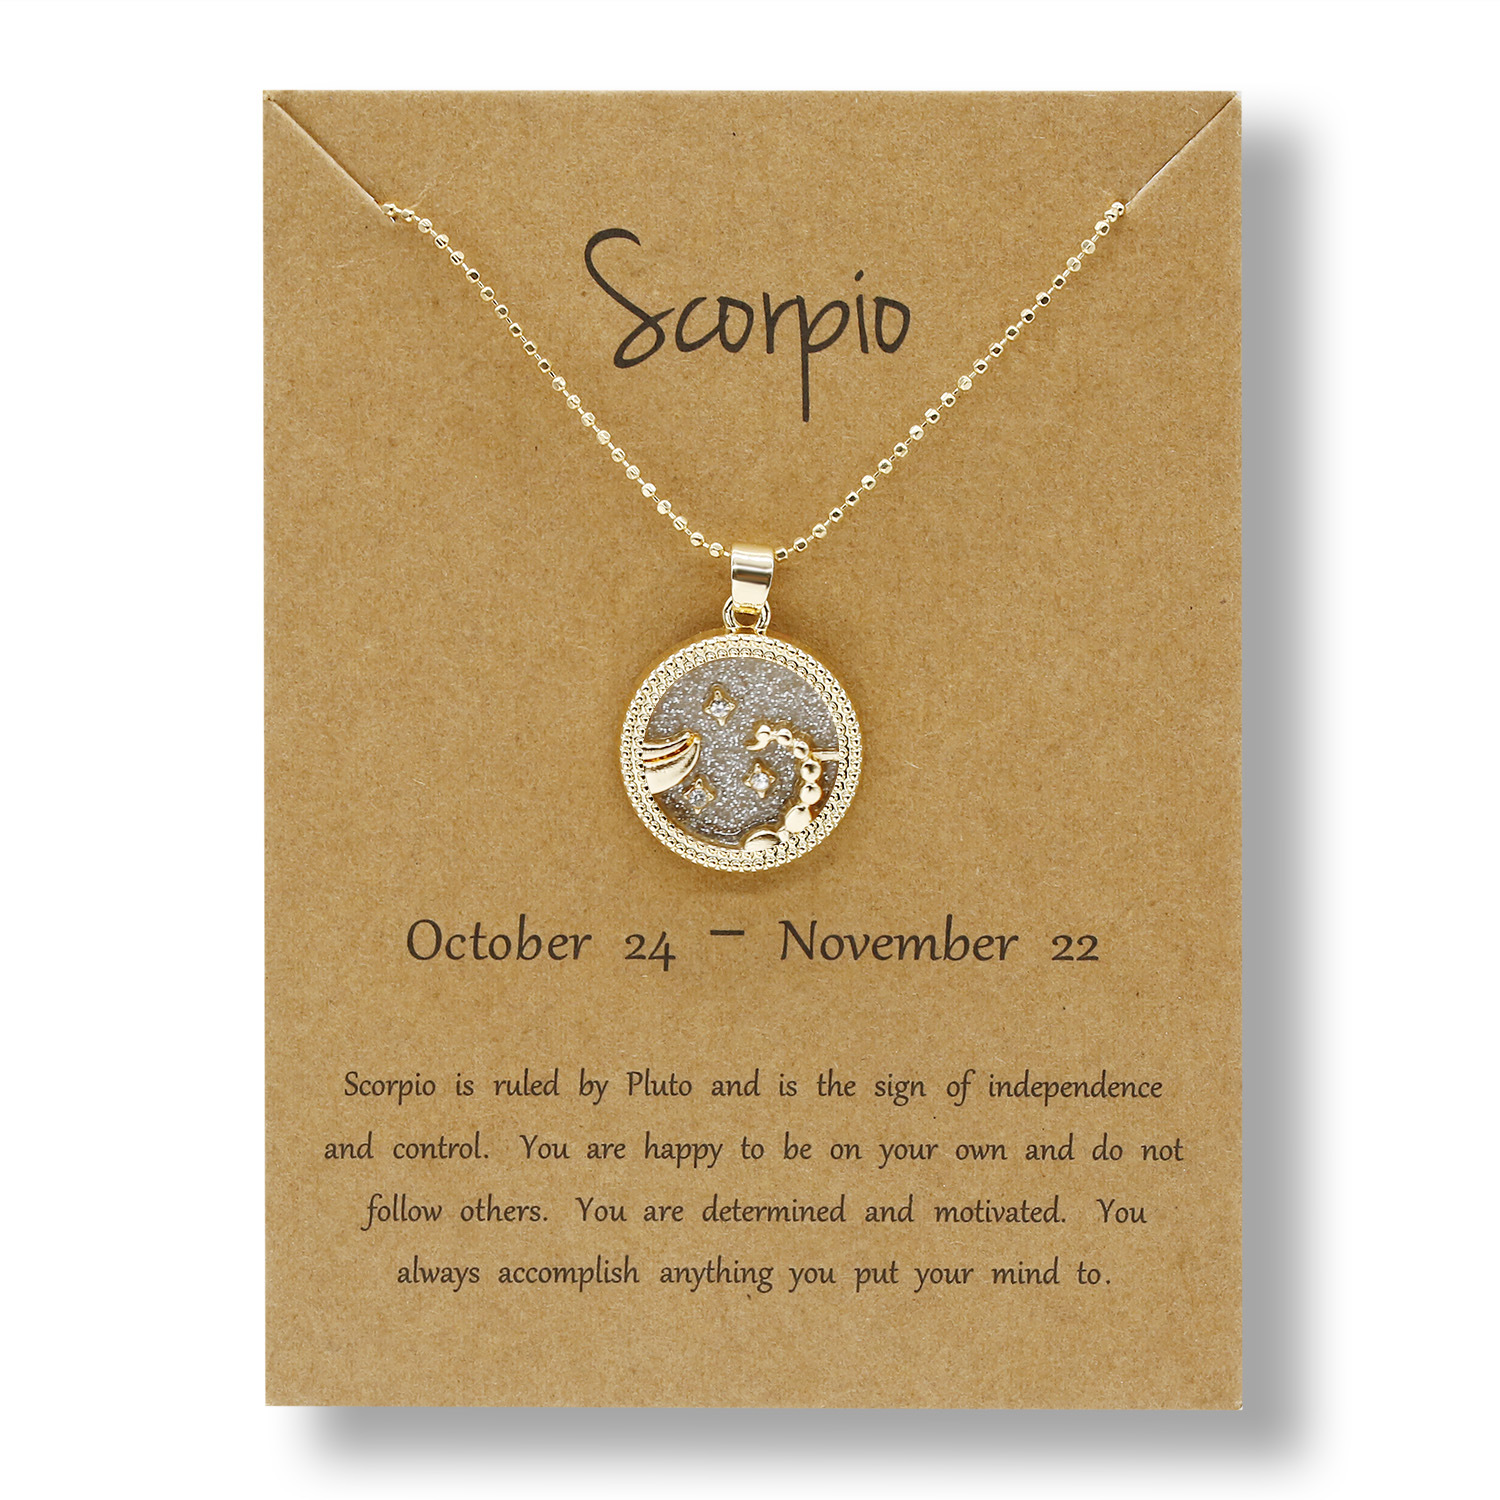 10:Scorpio (Golden Day)